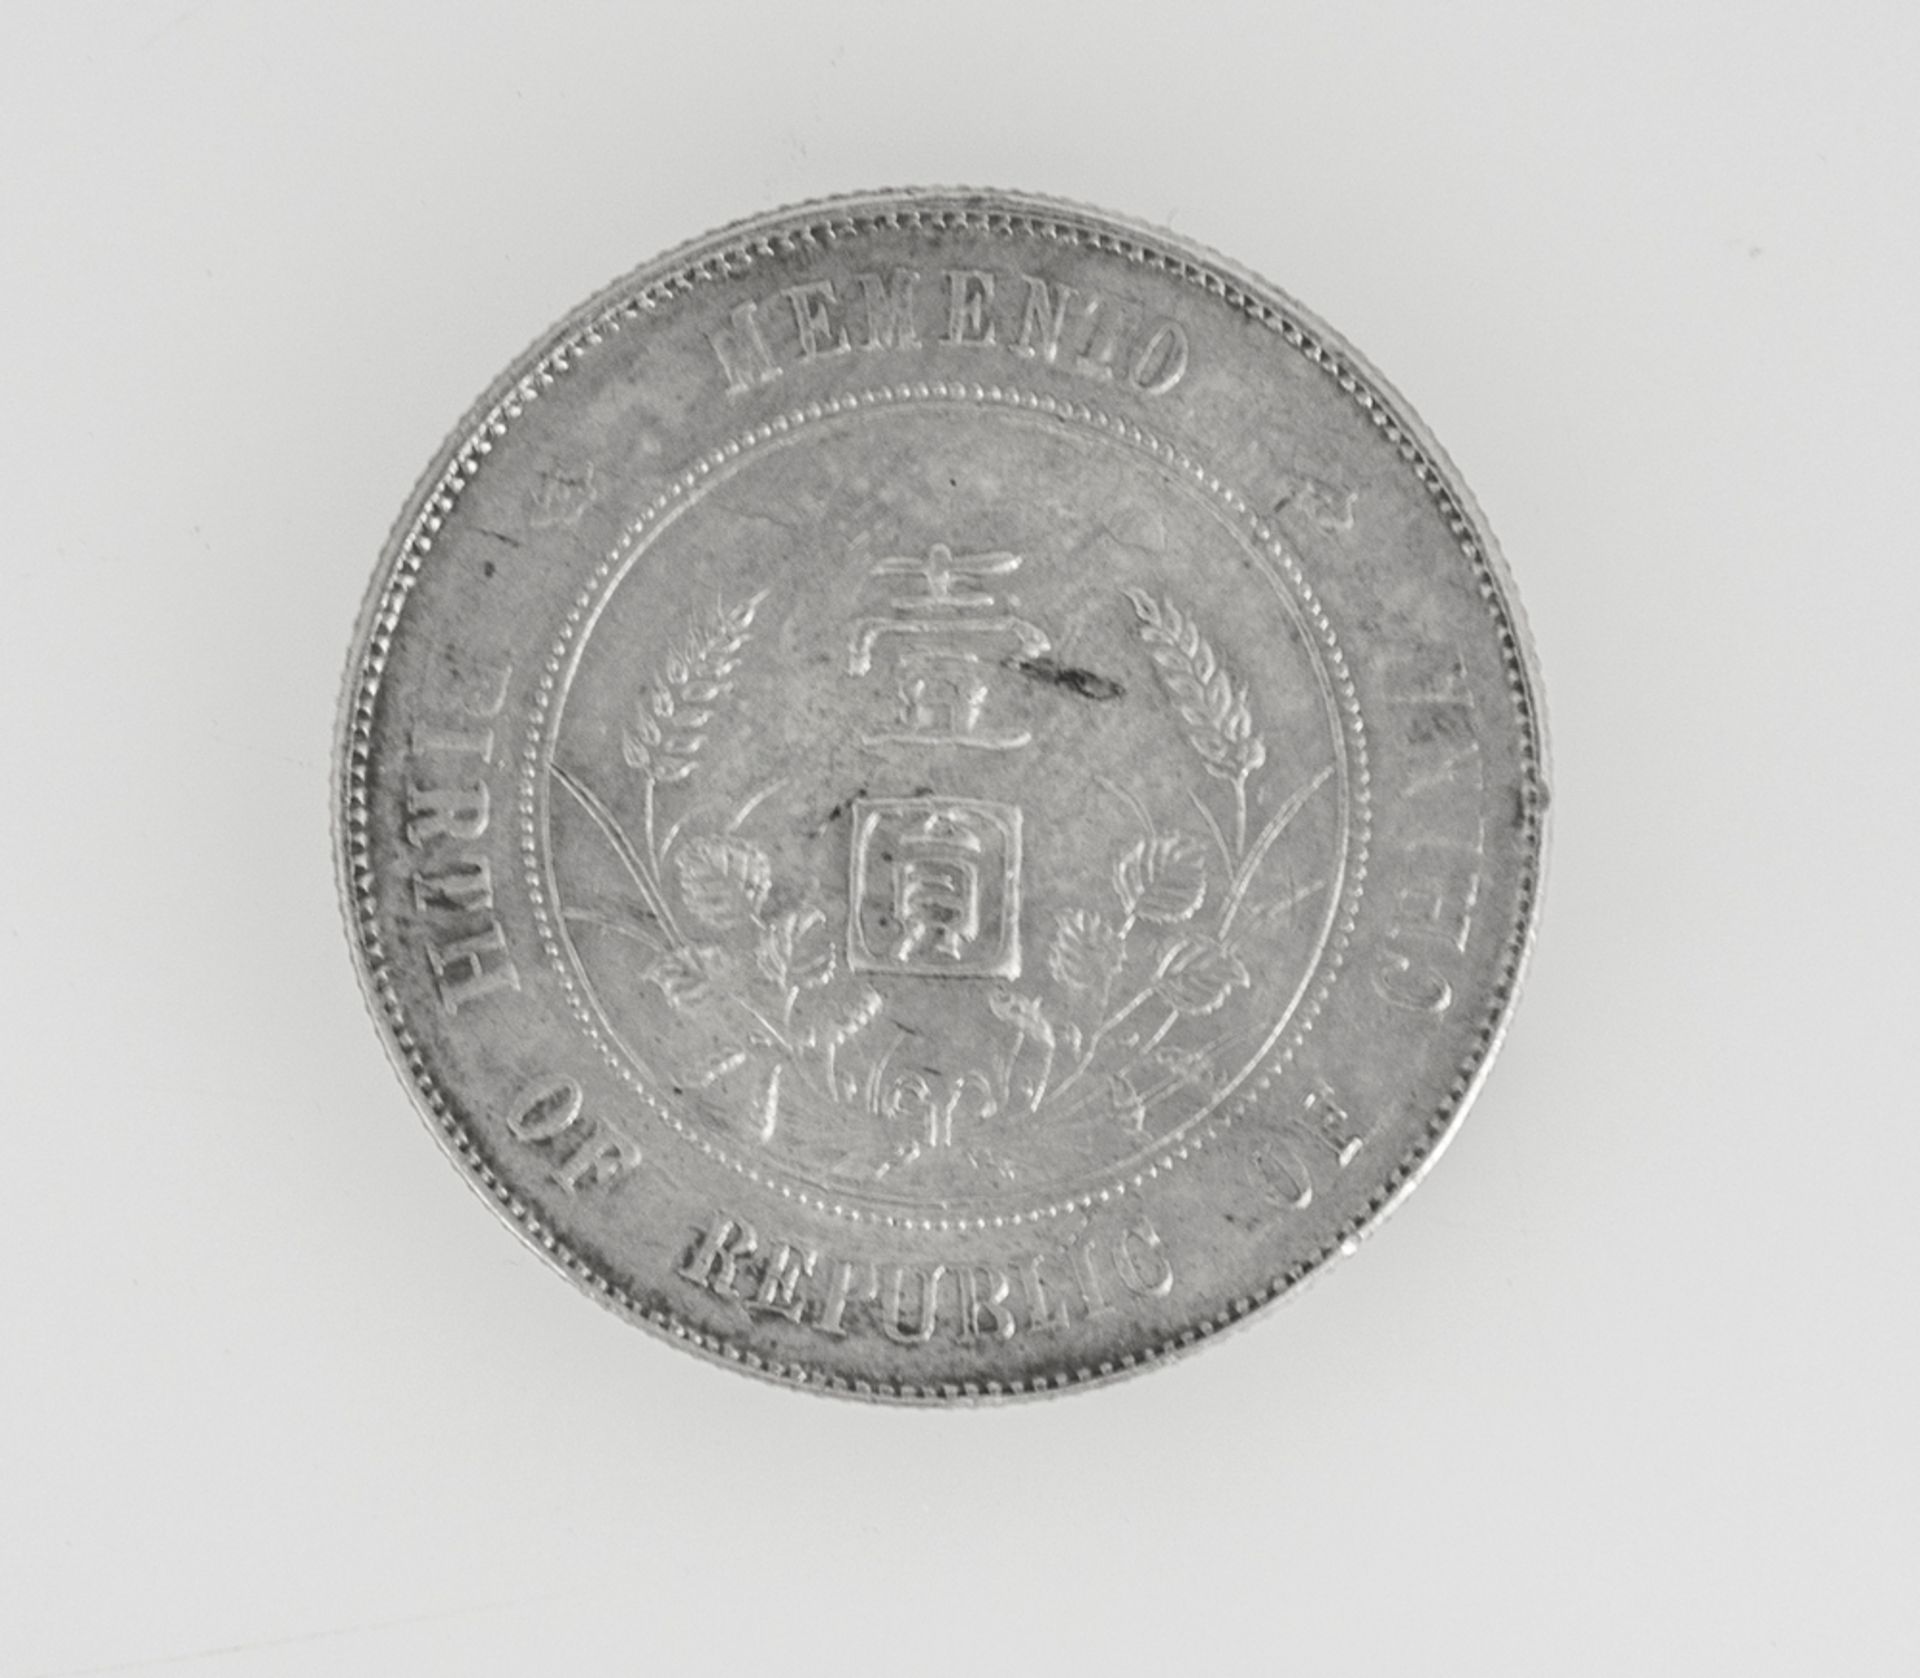 China Republik, 1 Dollar "Dr. Sun Yat Sen". Silber. Erhaltung: ss. - Bild 2 aus 2